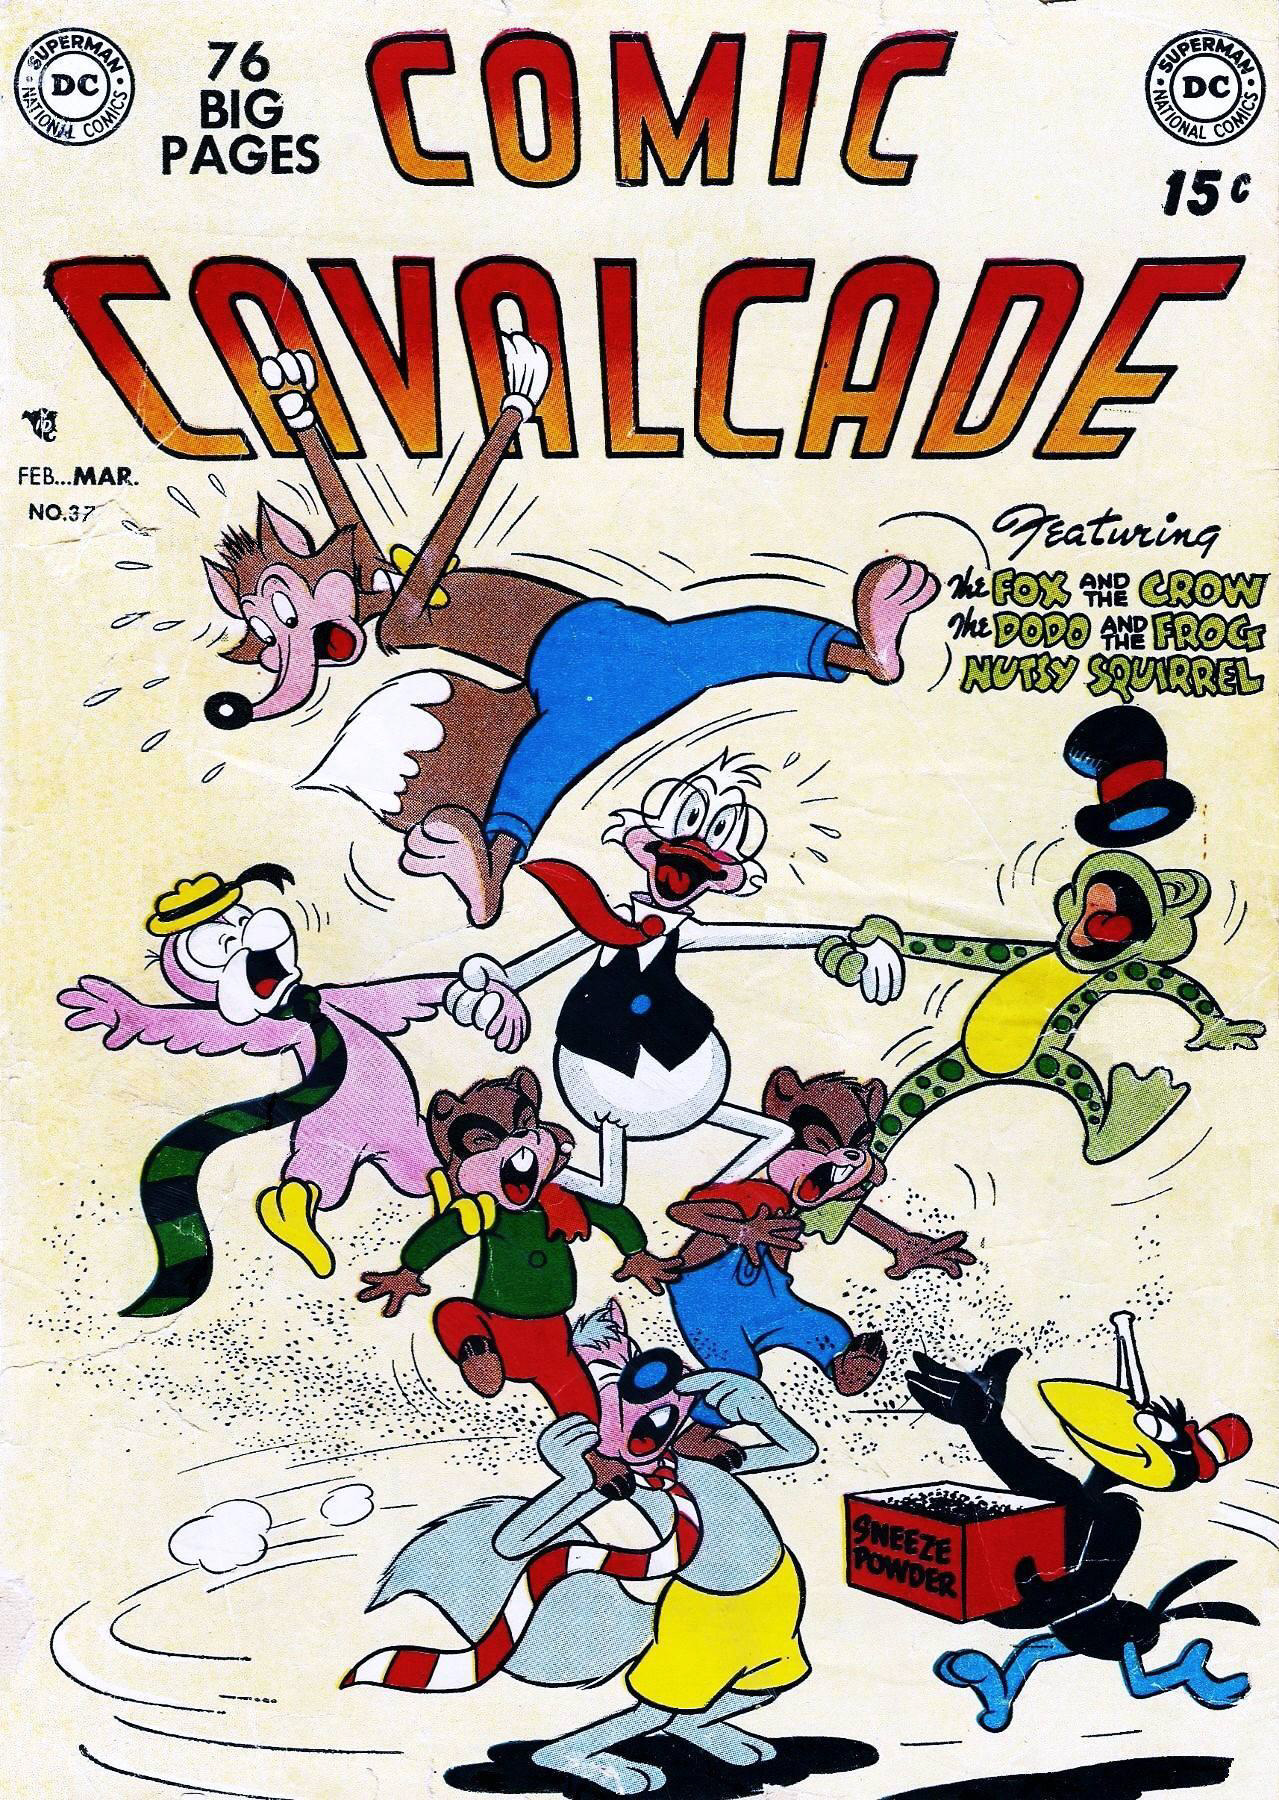 Comic Cavalcade issue 37 - Page 1